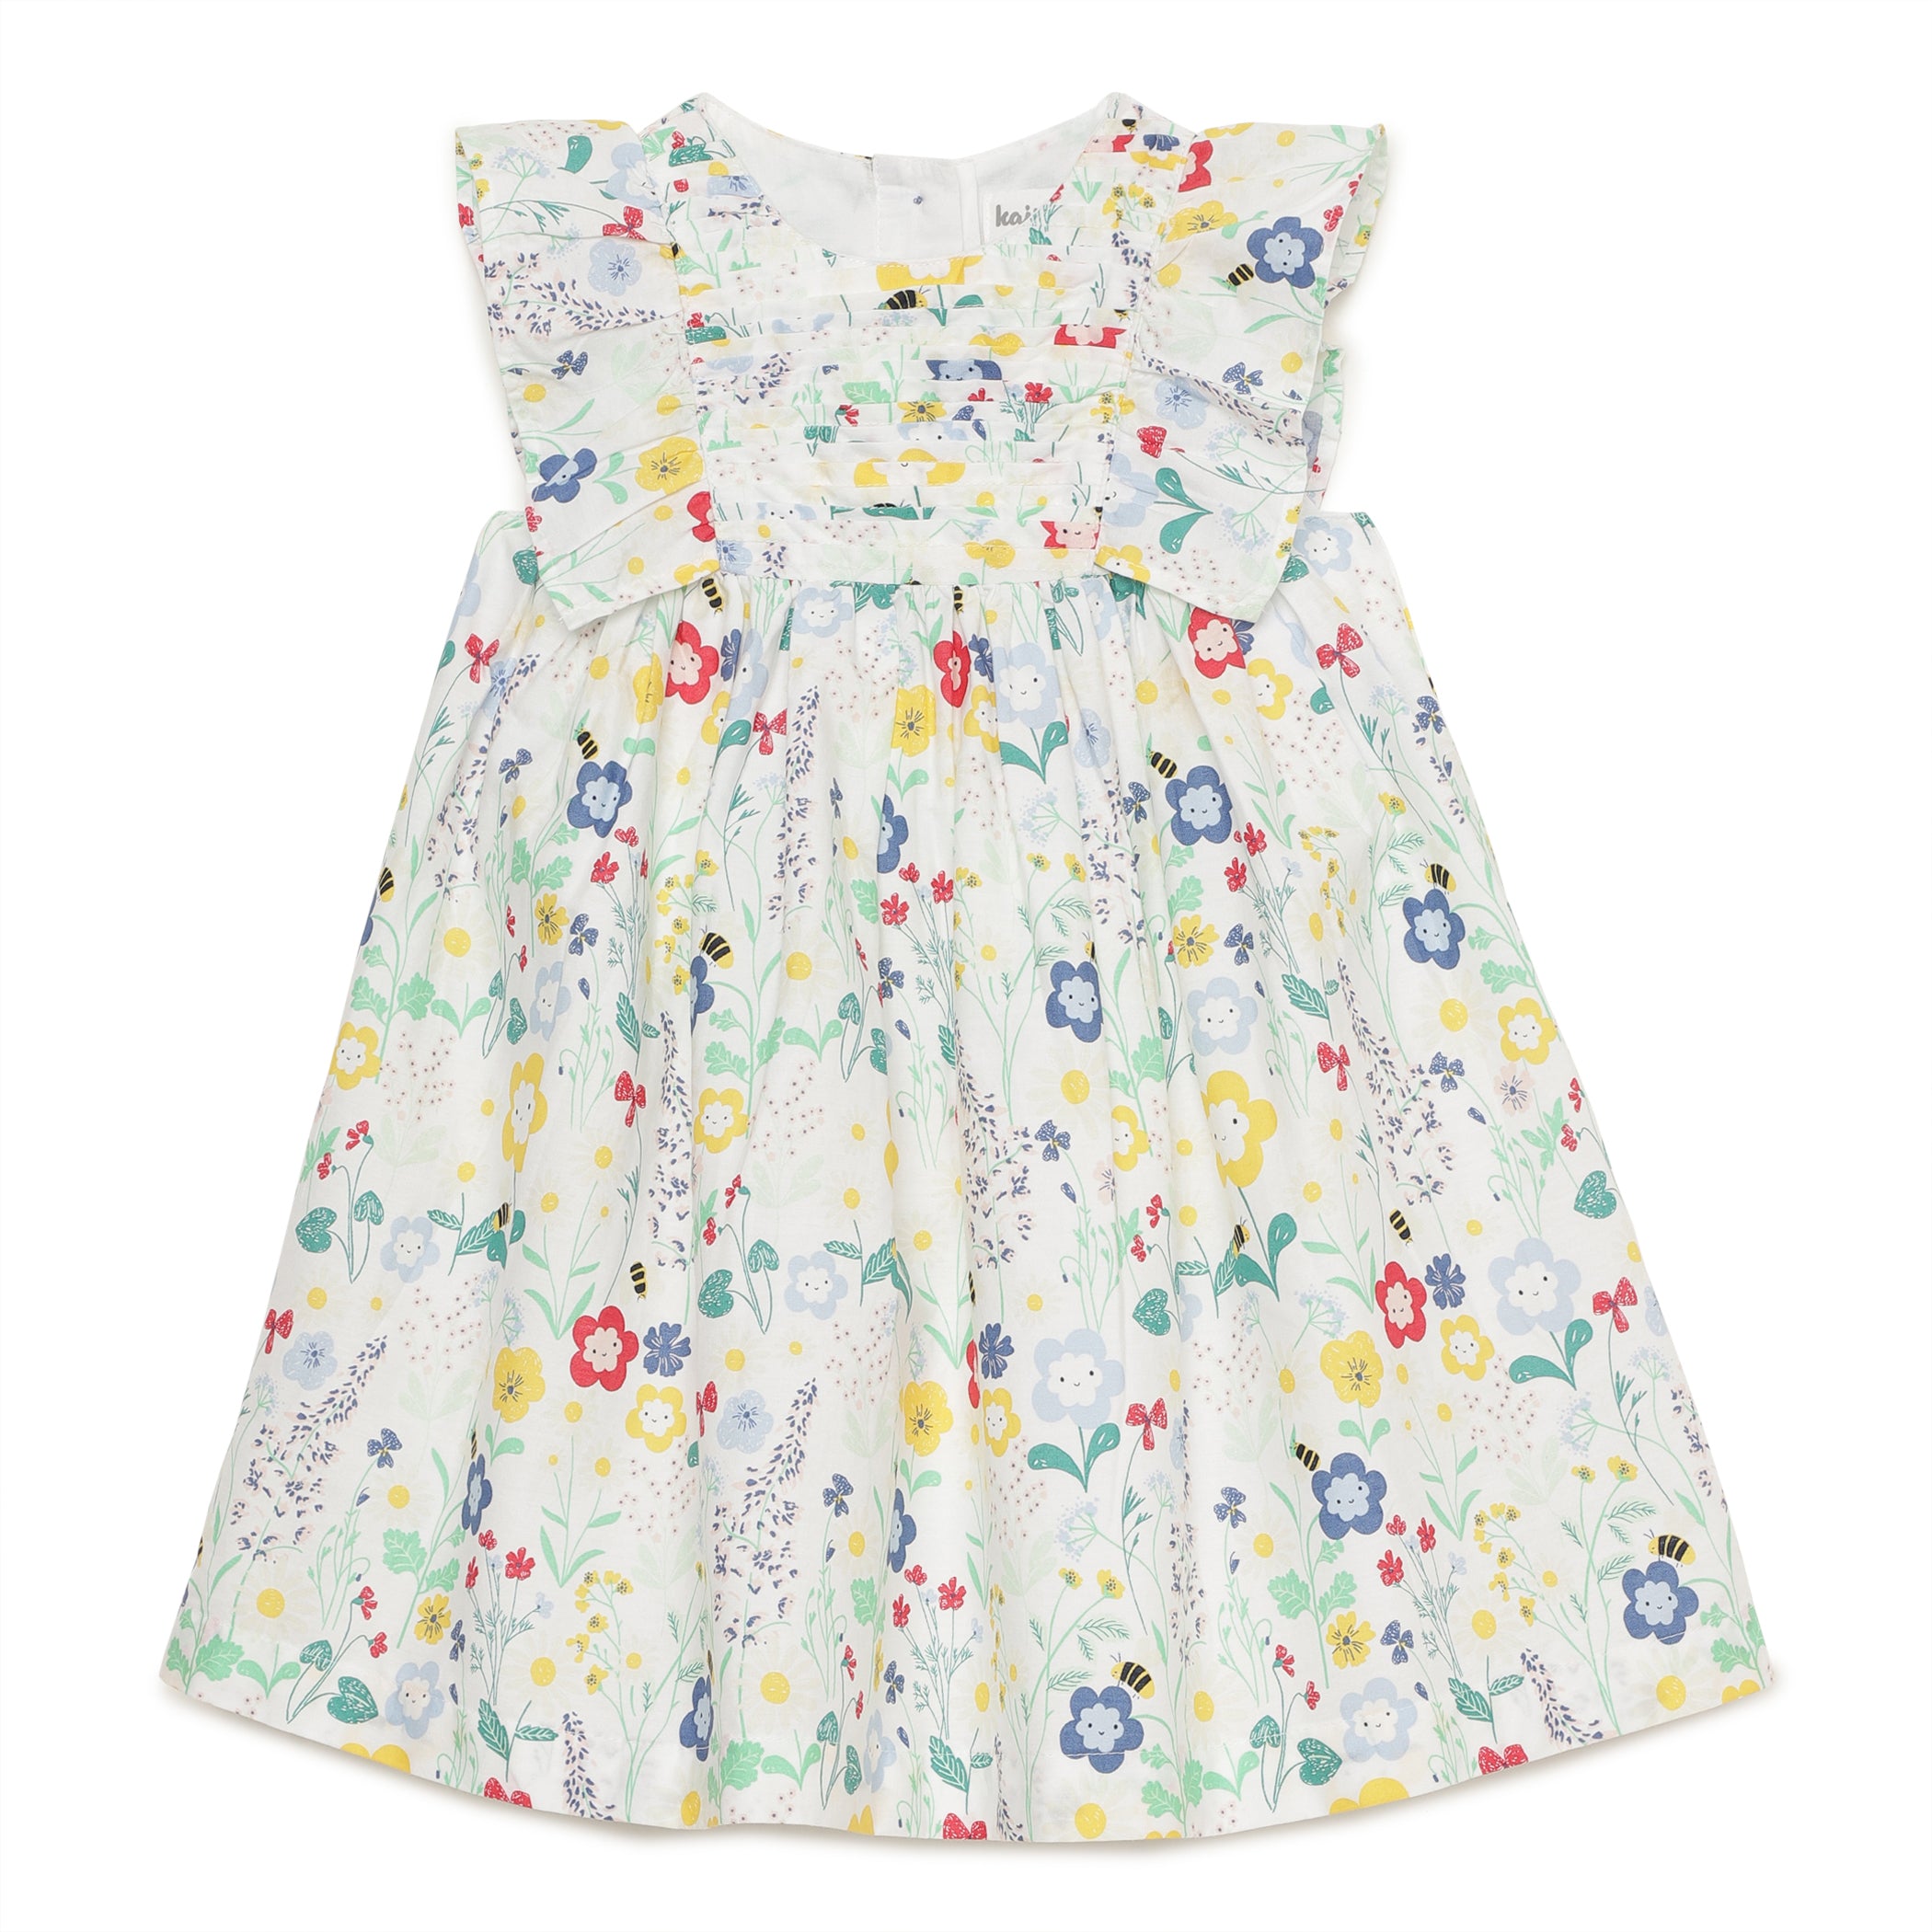 Baby Girls Floral Printed Dress